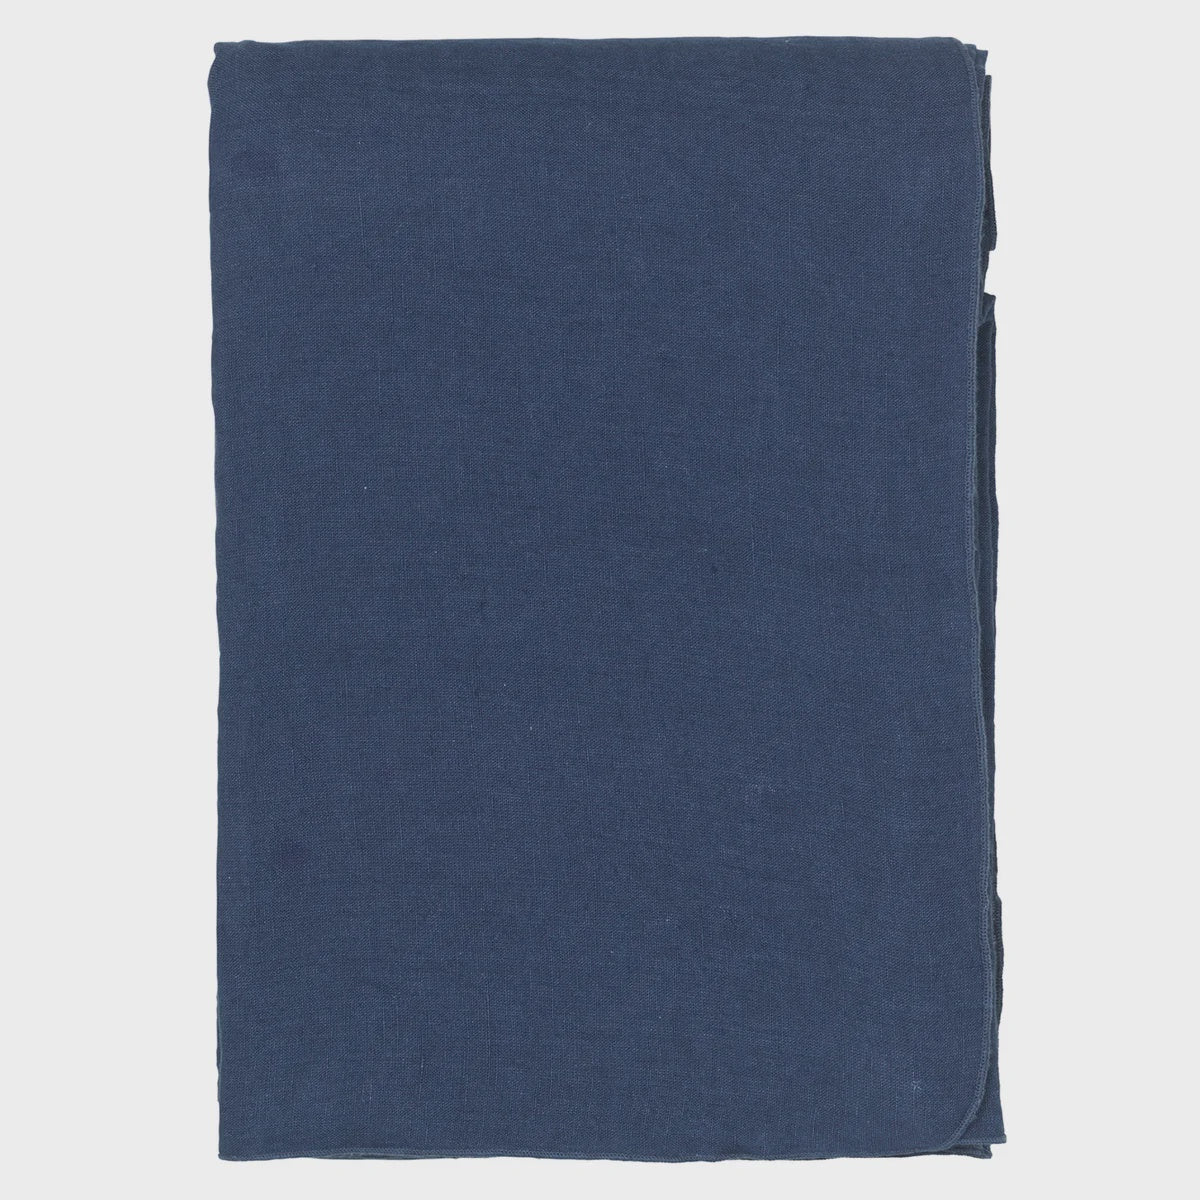 Broste Table Cloth - INSIGNIA BLUE